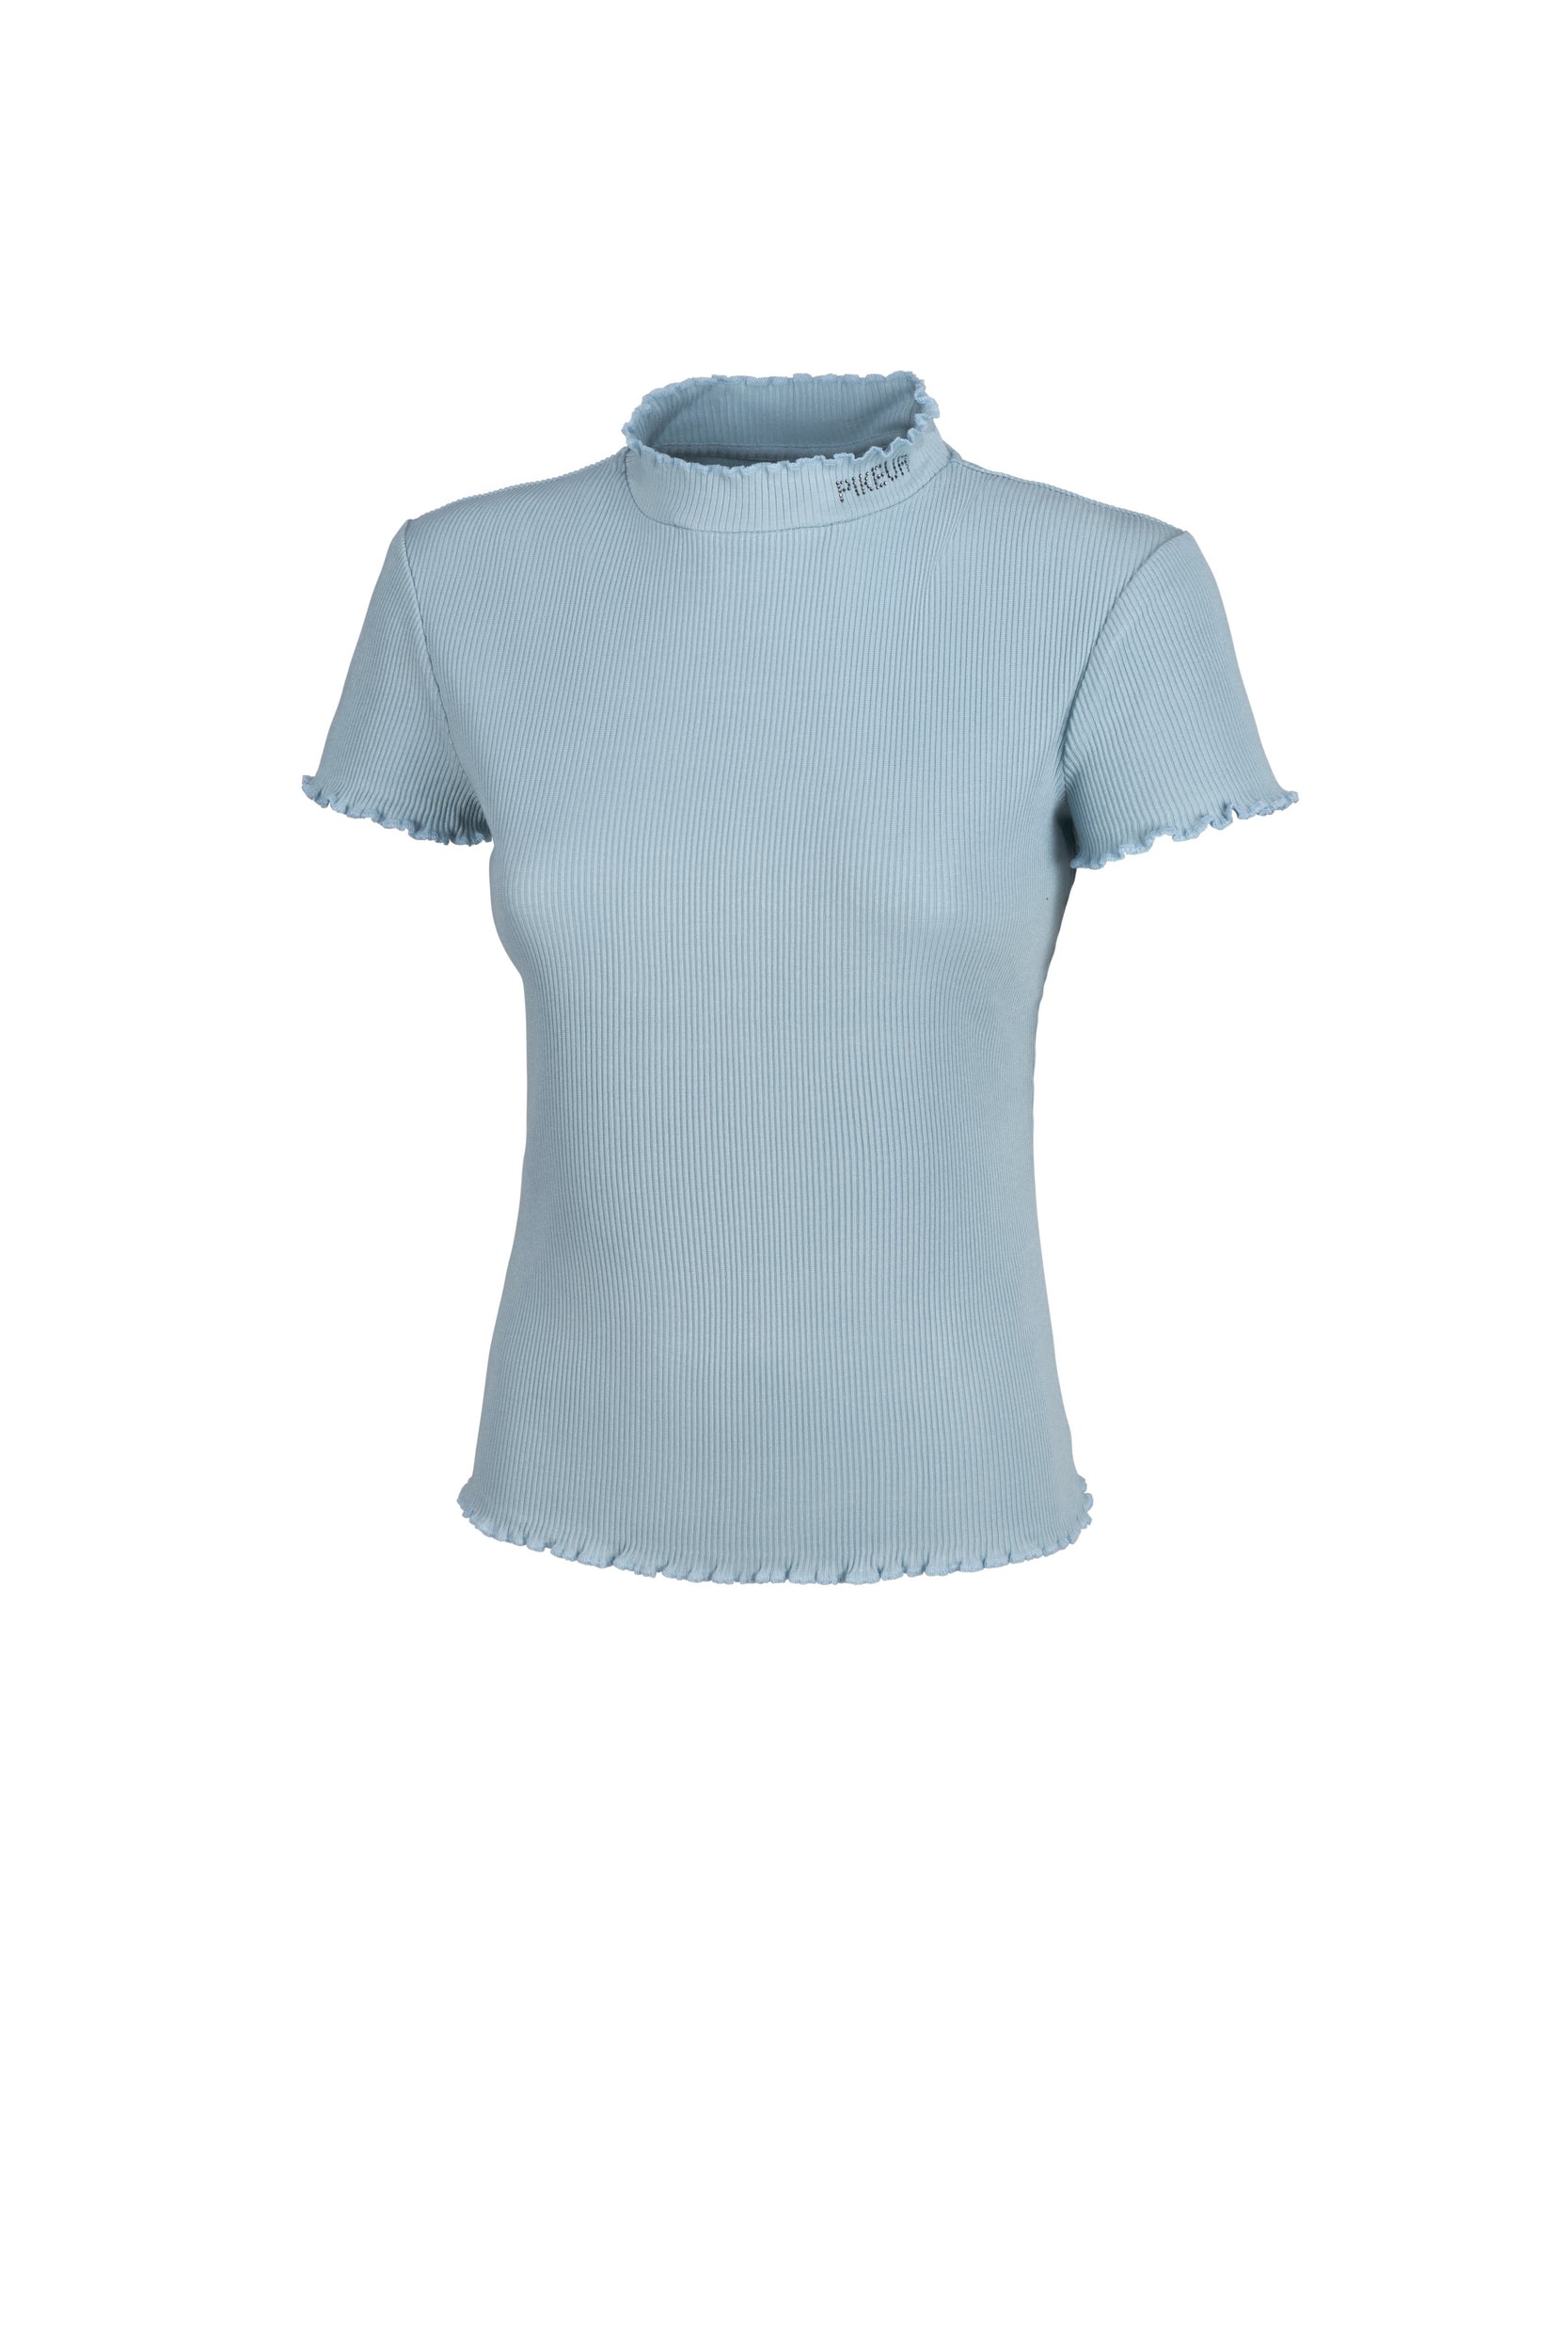 Pikeur Rip T-shirt in Pastel blue